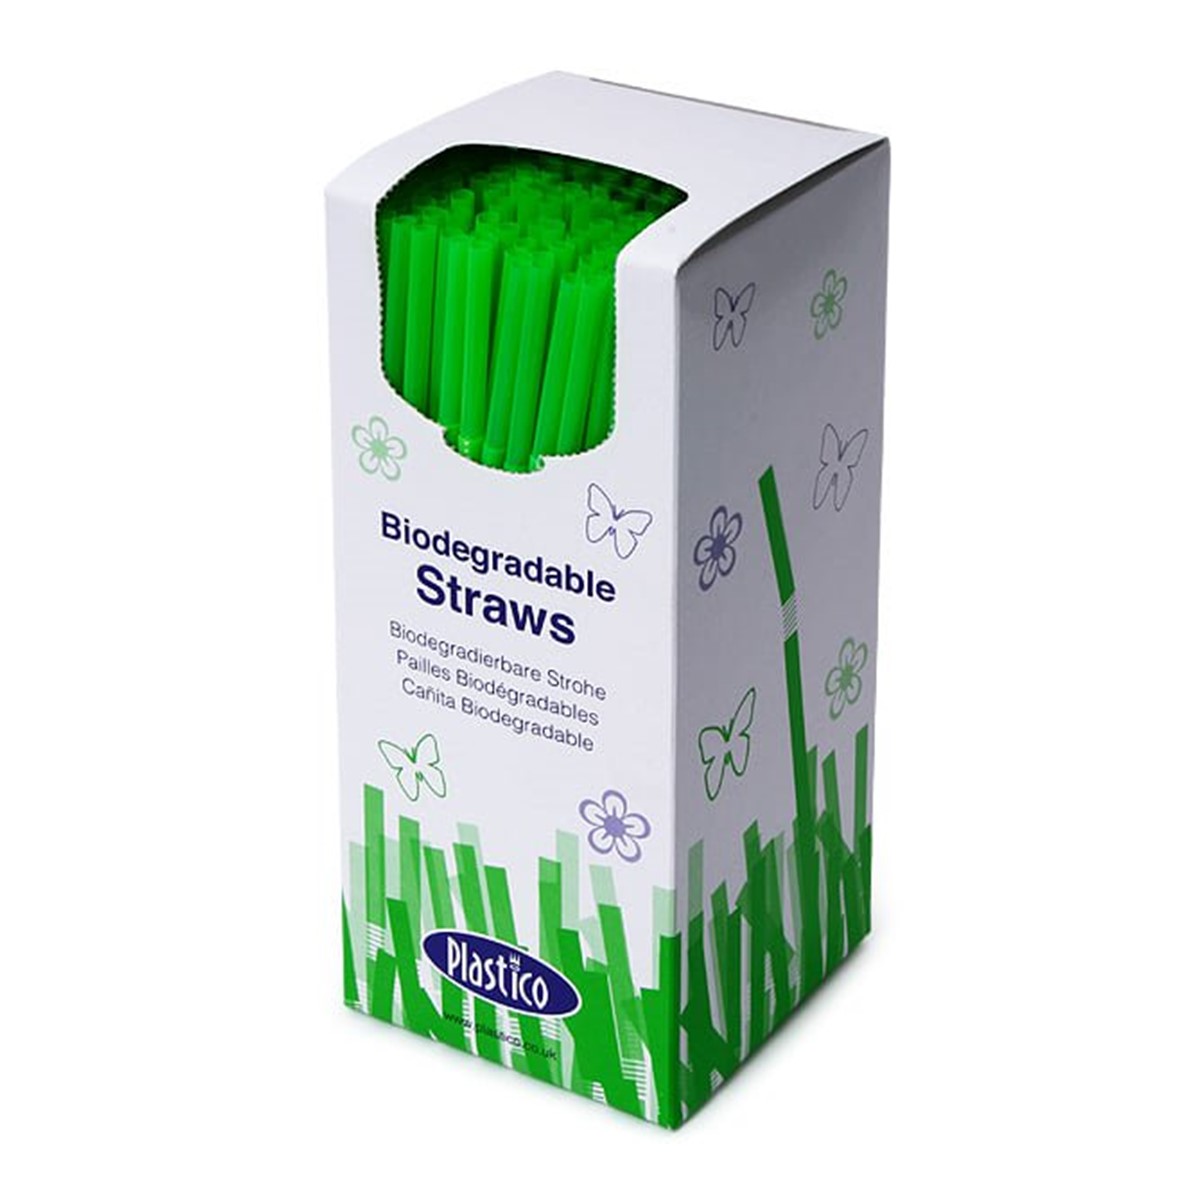 Plastico Straws Bendy Green - 250 straws [BIO-D]